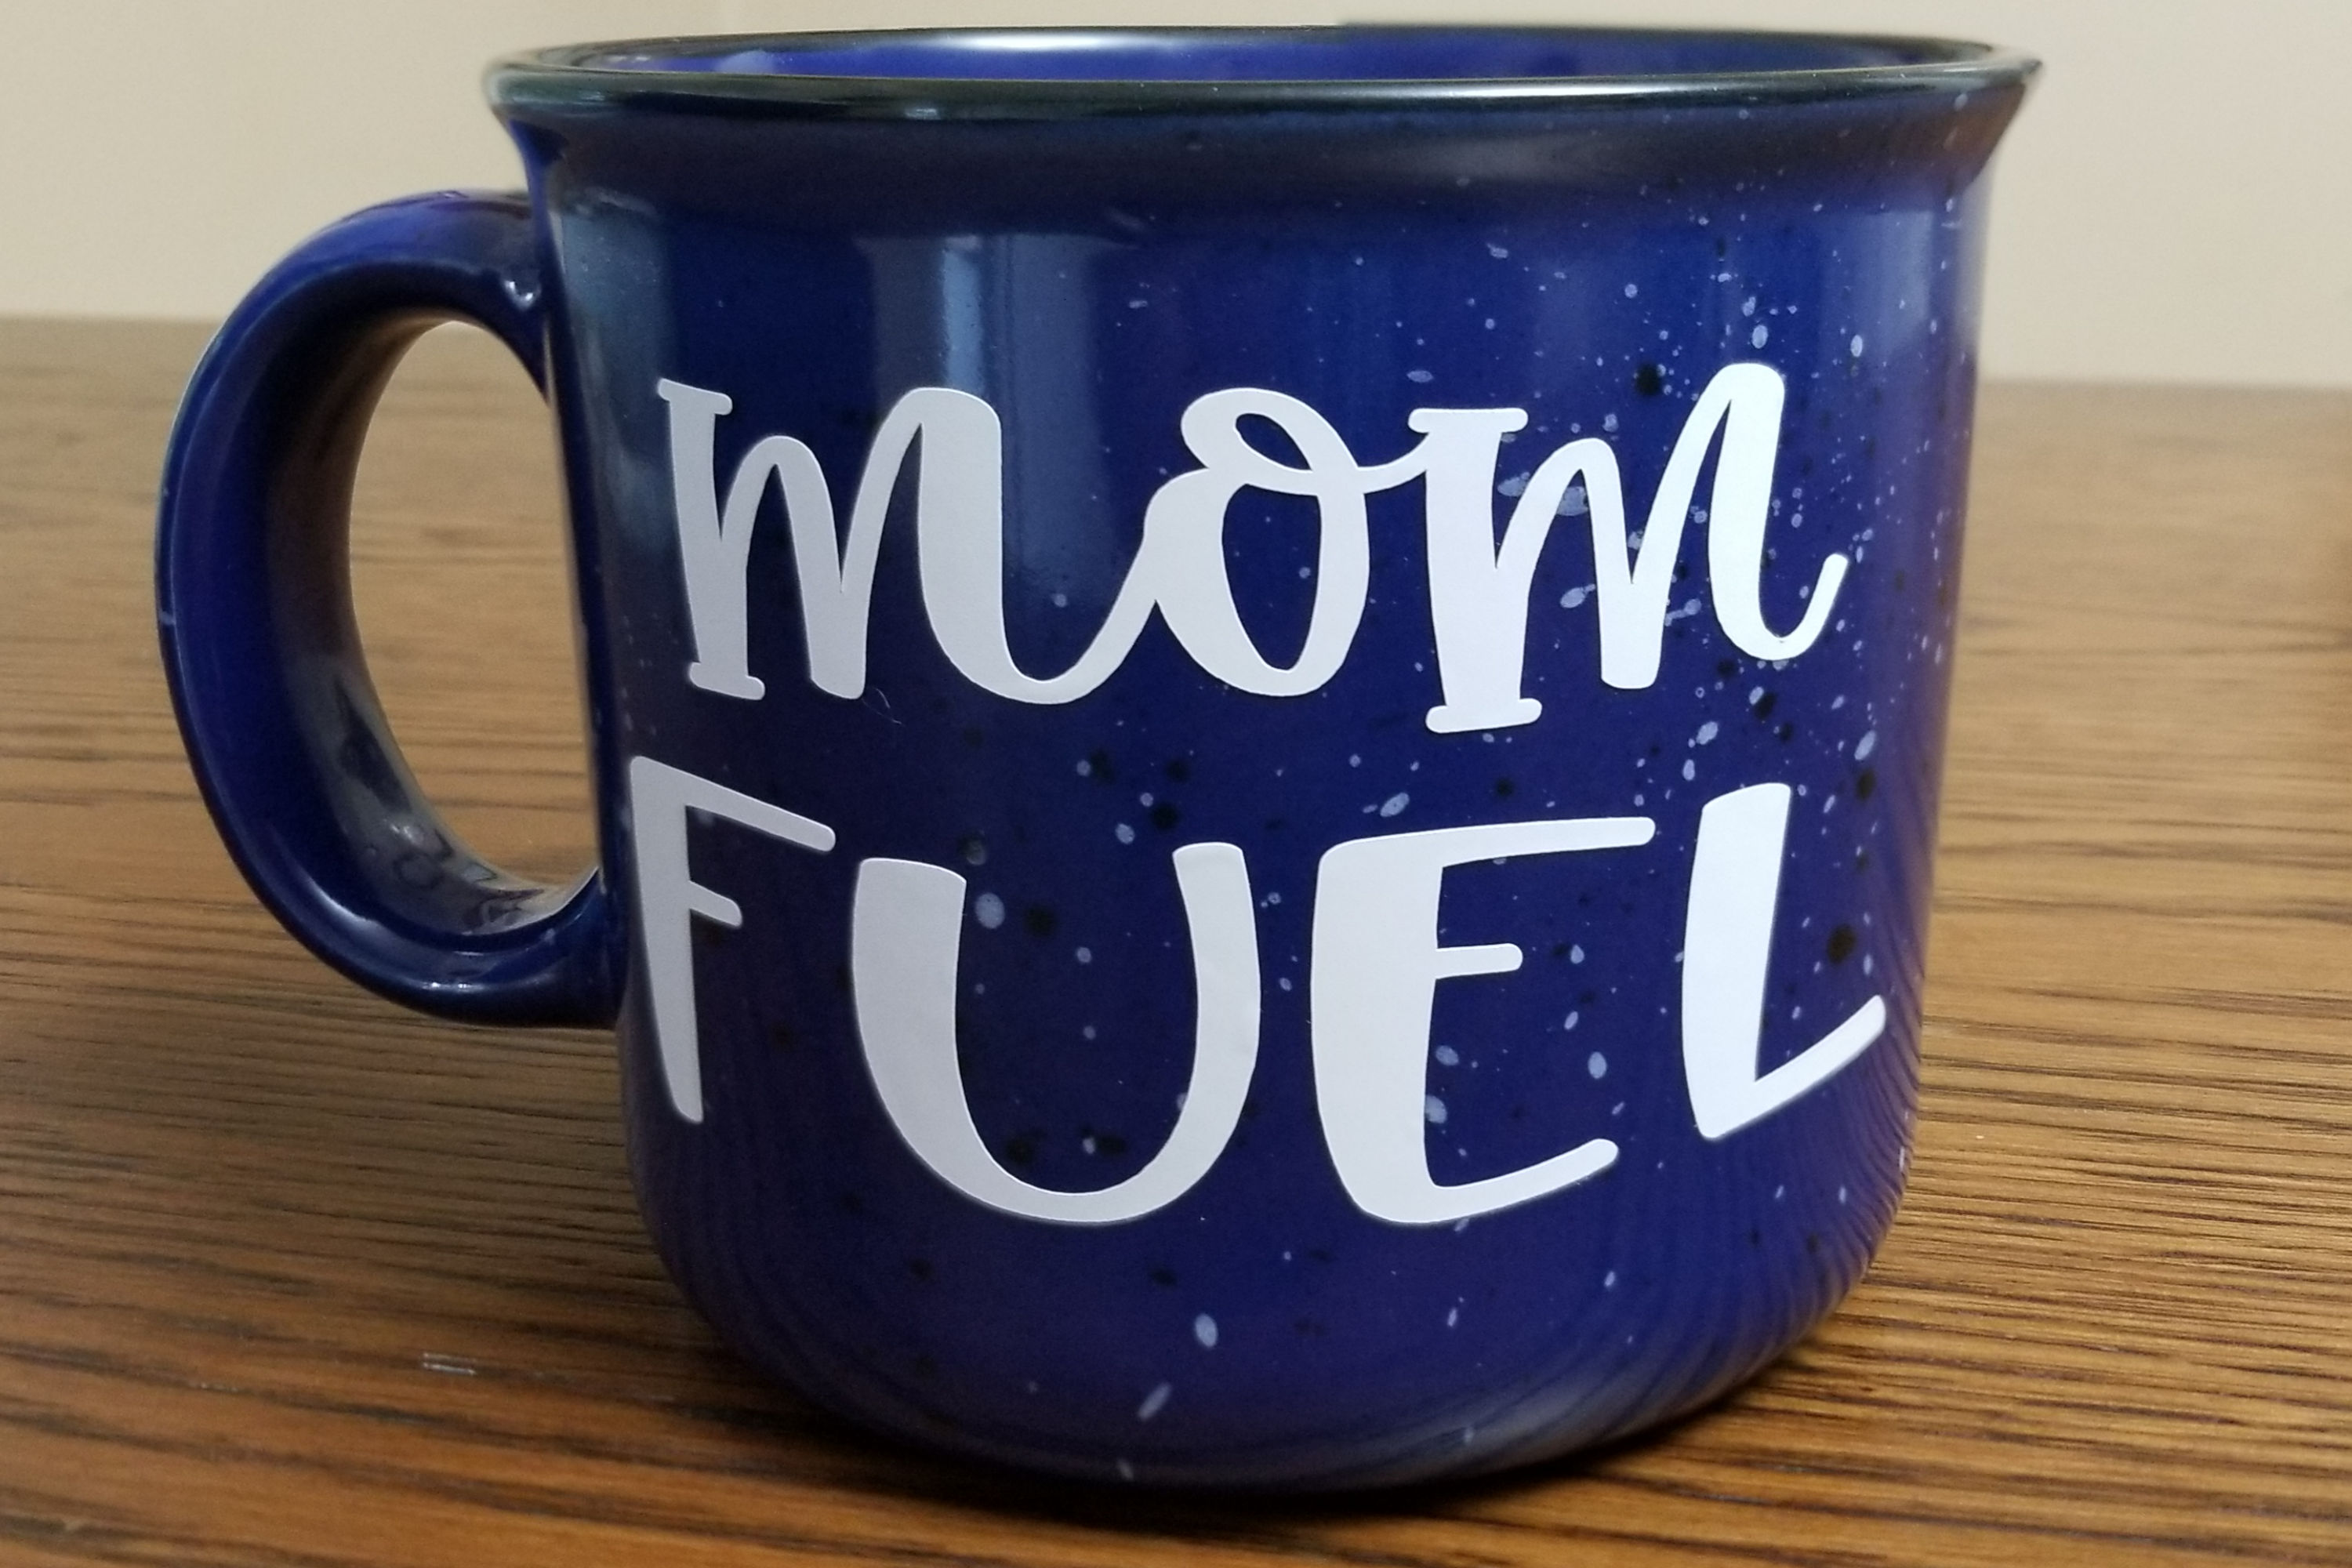 Download Mom SVG - Mom Fuel coffee mug SVG (265184) | Cut Files ...